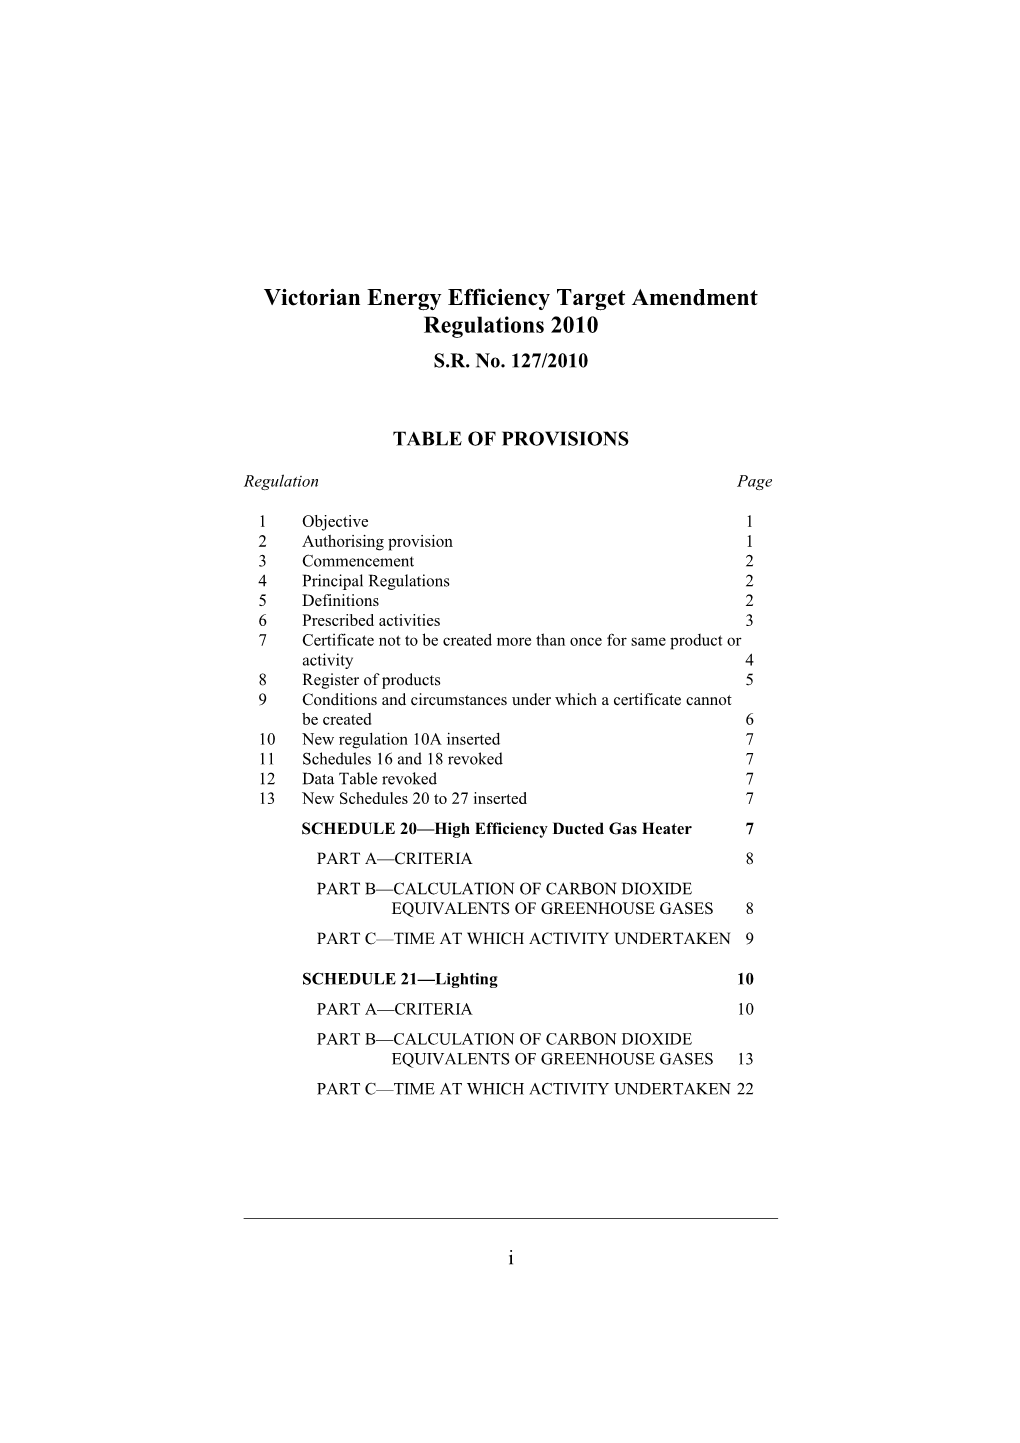 Victorian Energy Efficiency Target Amendment Regulations 2010